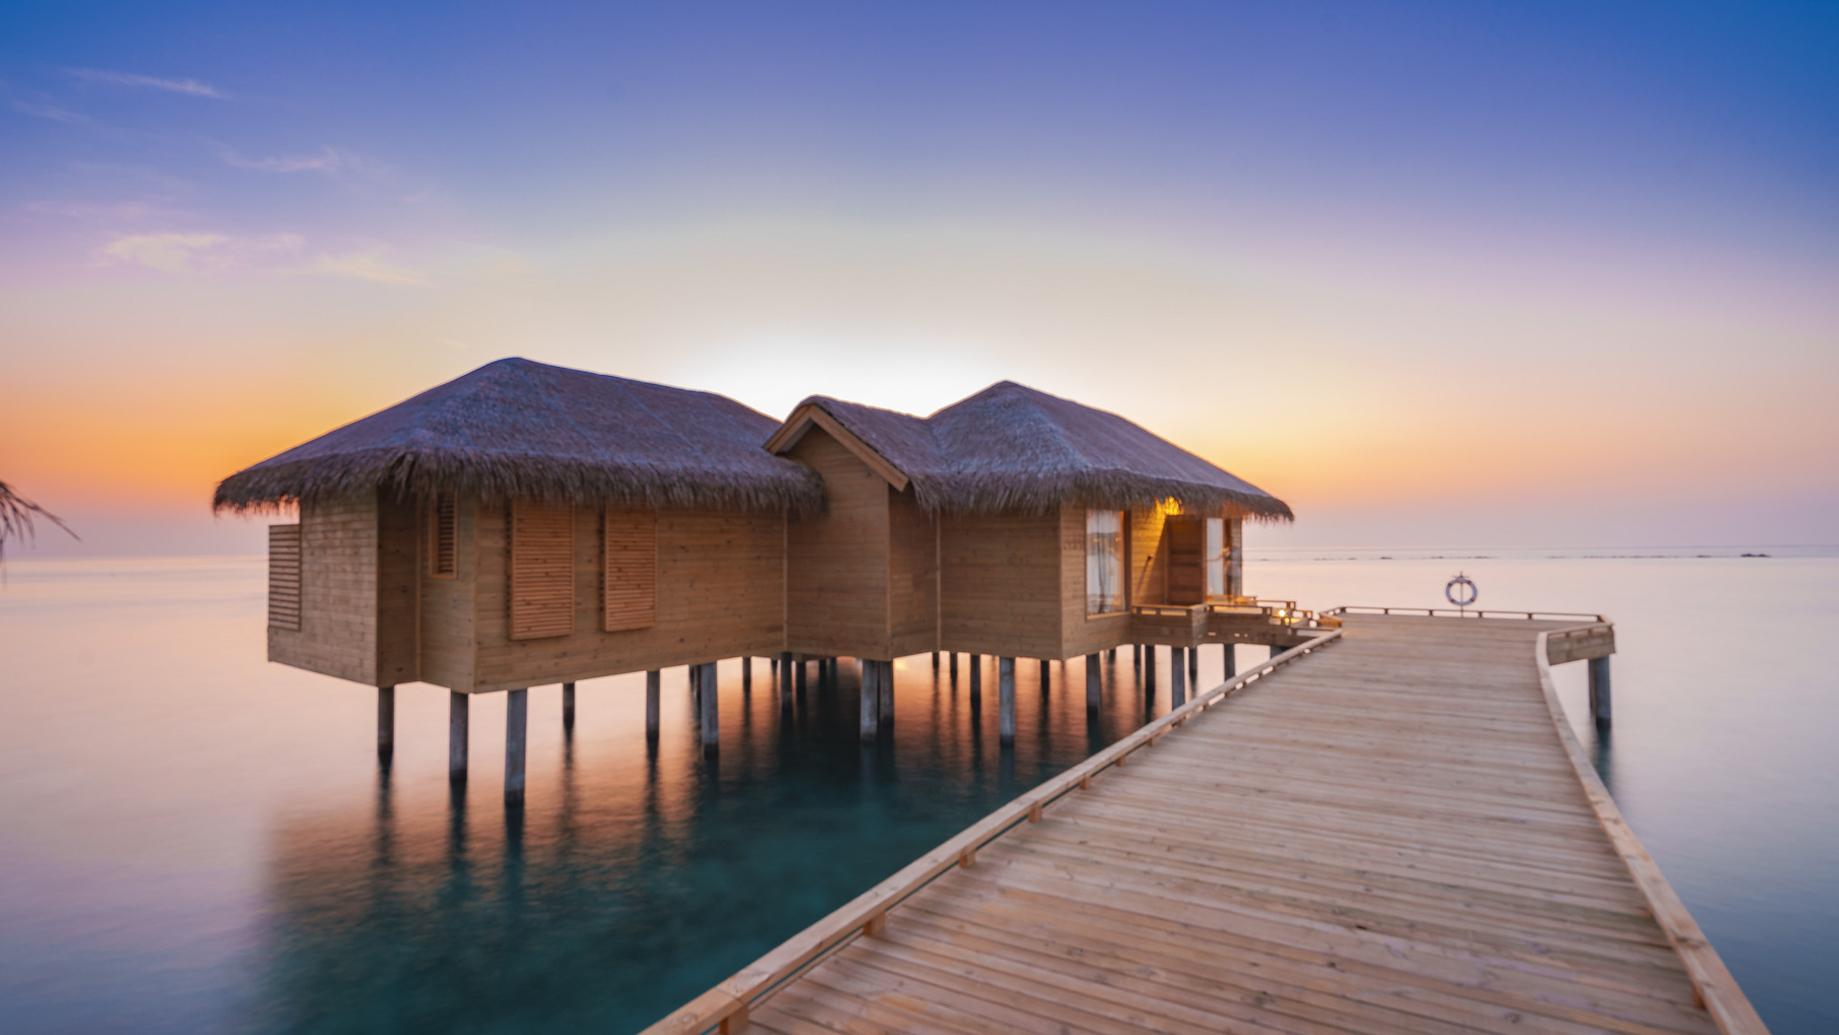 You & Me Maldives Resort - Uthurumaafaru, Raa Atoll, Maldives - You and Me Suite Sunset